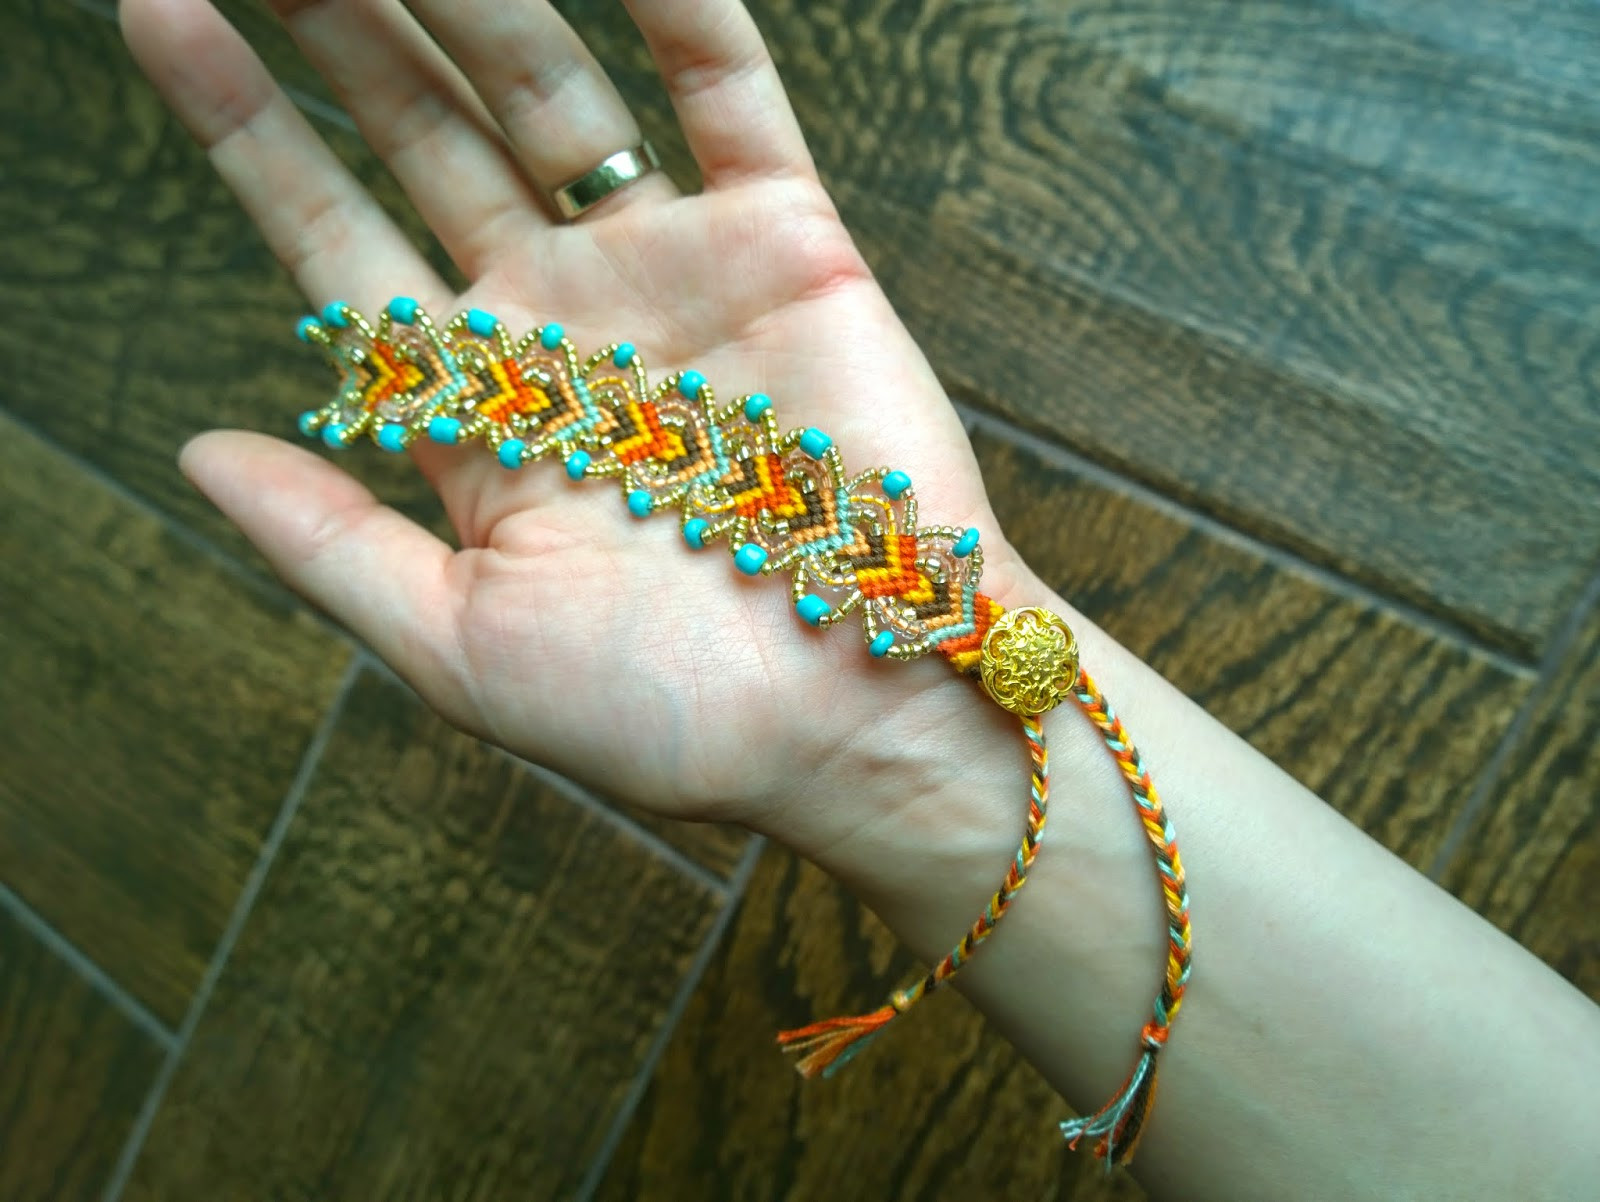 Best ideas about DIY Friendship Bracelets
. Save or Pin Wonderful DIY Pretty Leaf Friendship Bracelets Now.